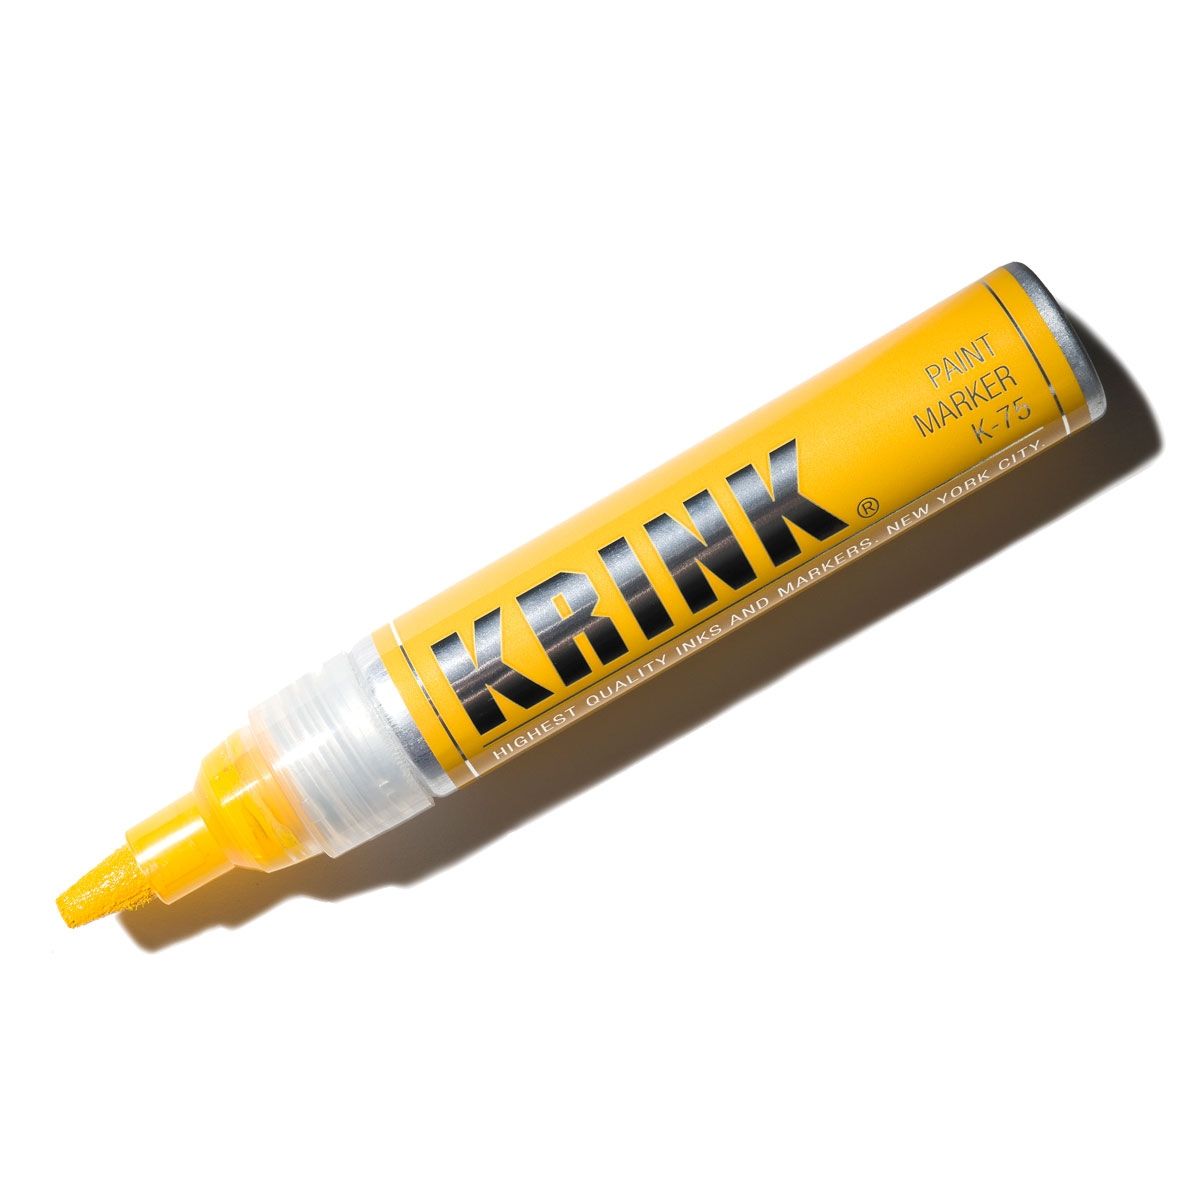 Krink K - 75 Paint Marker - Yellow